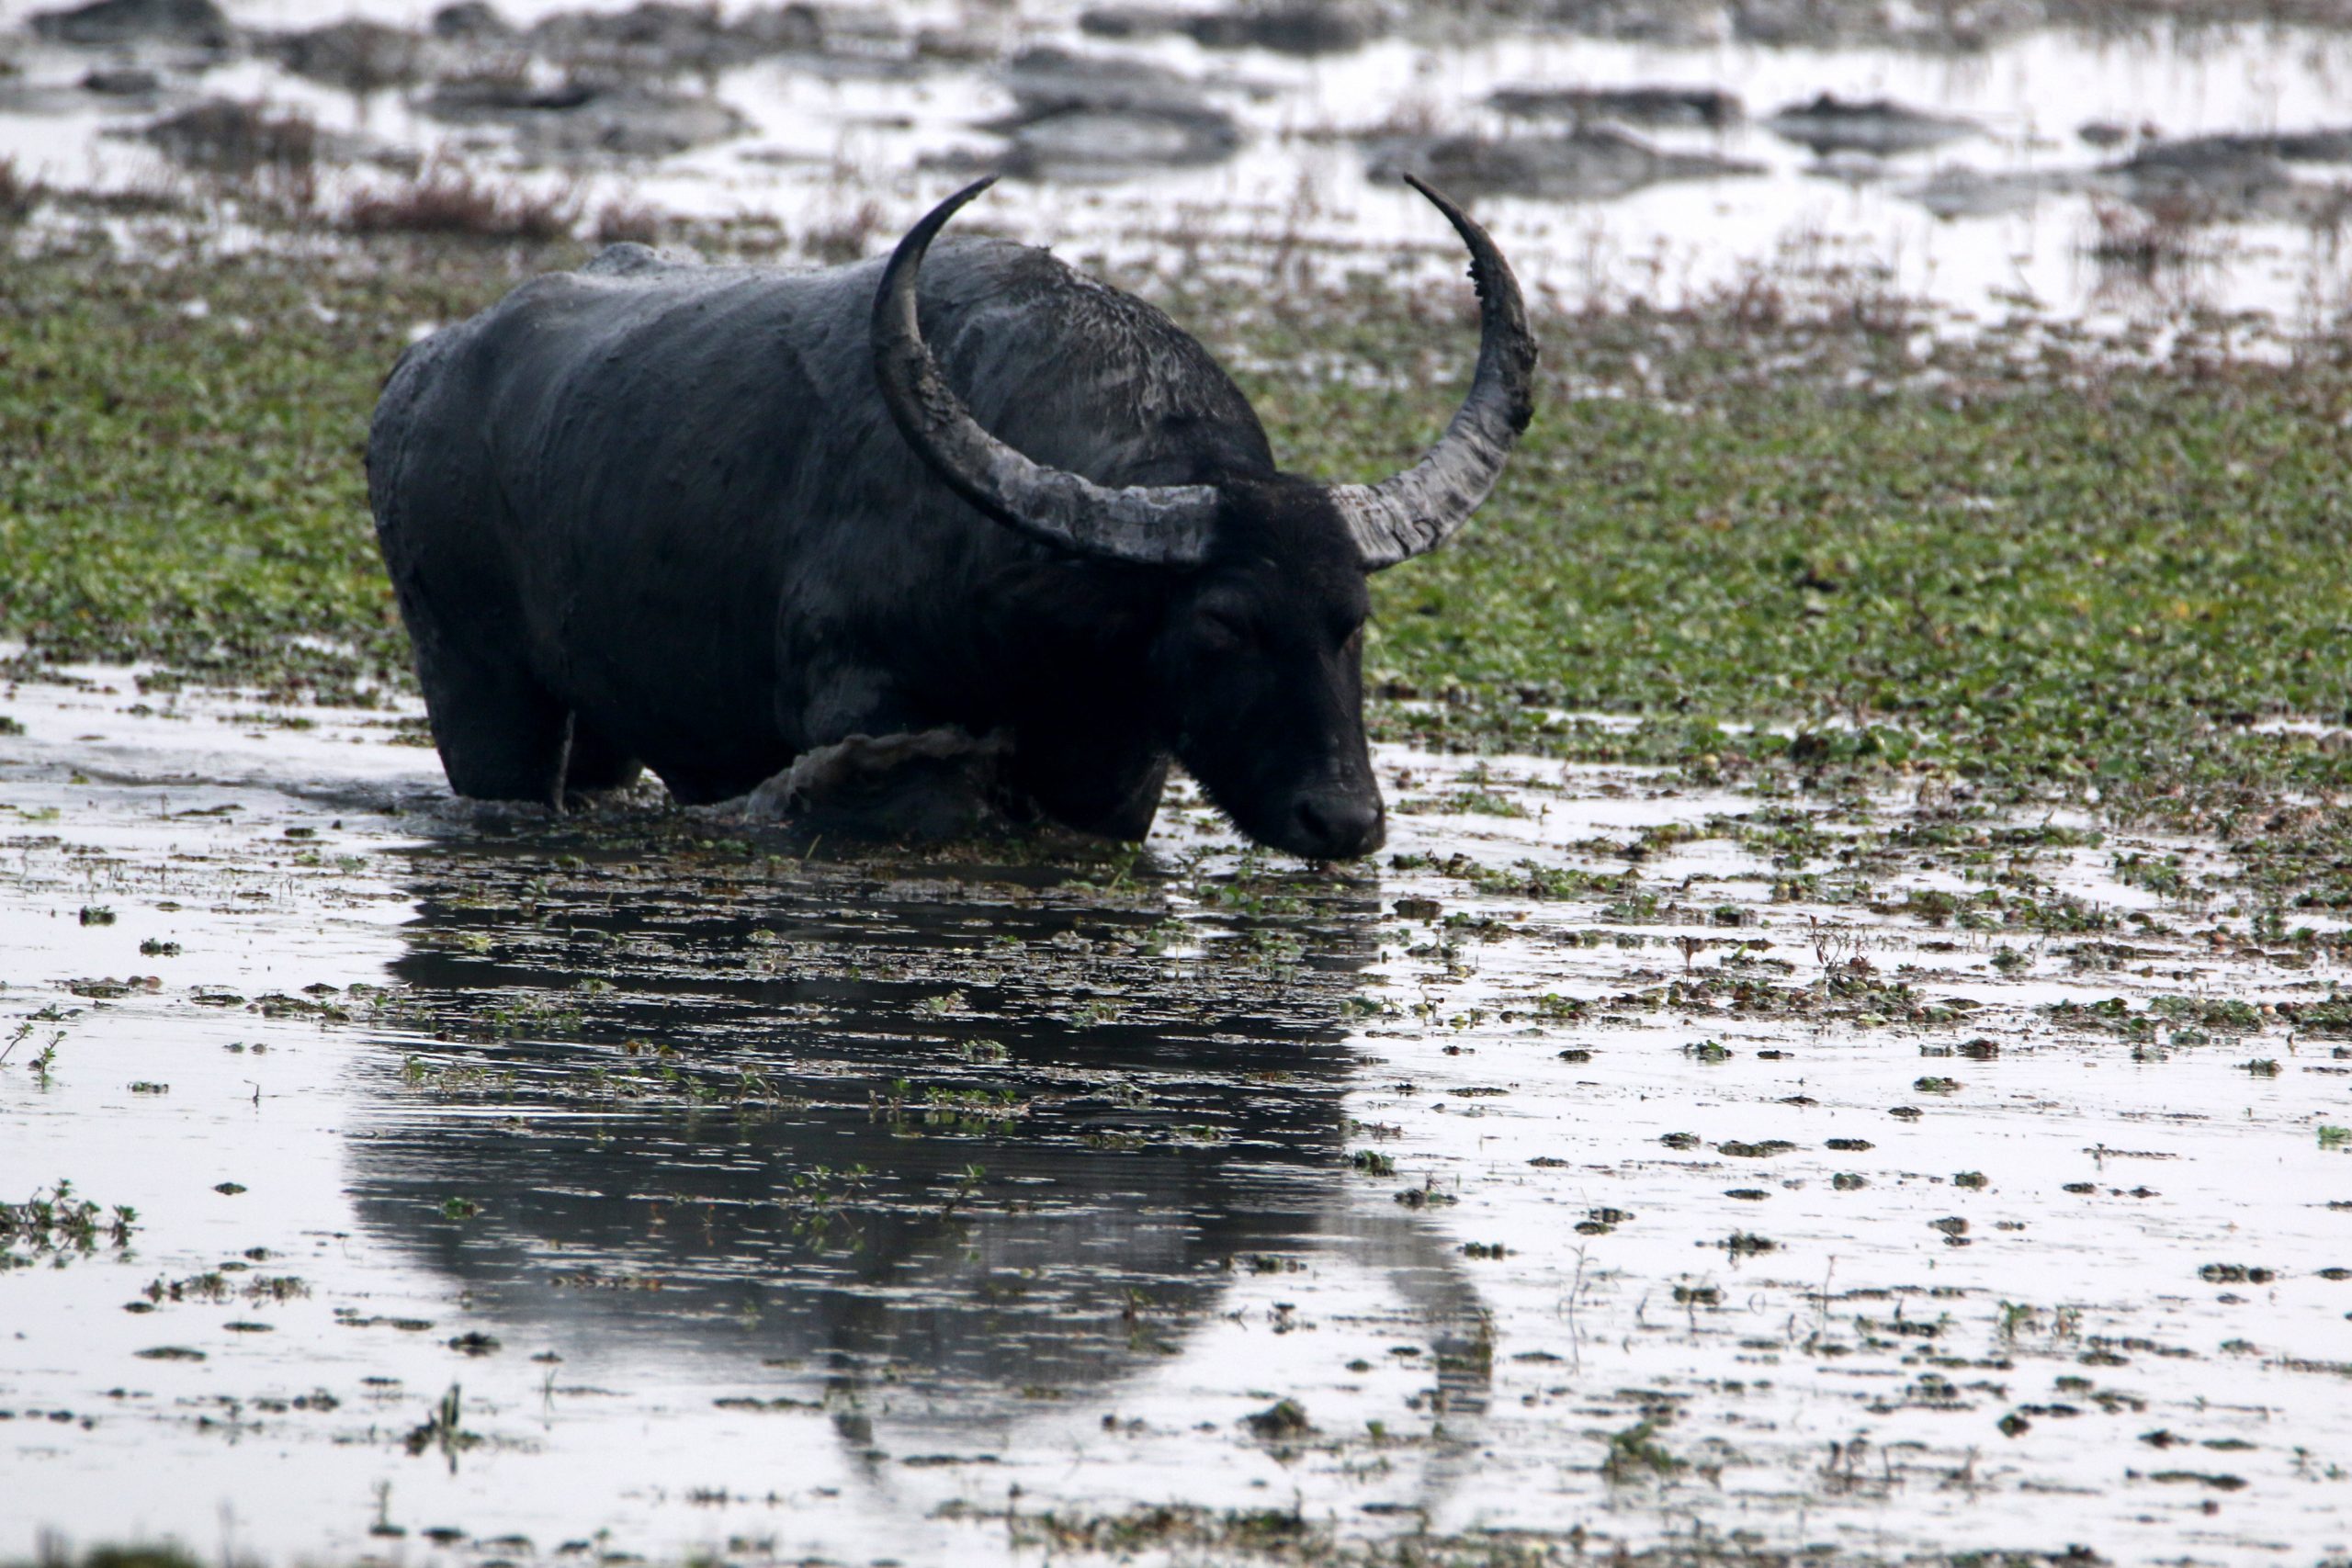 A buffalo in a pond